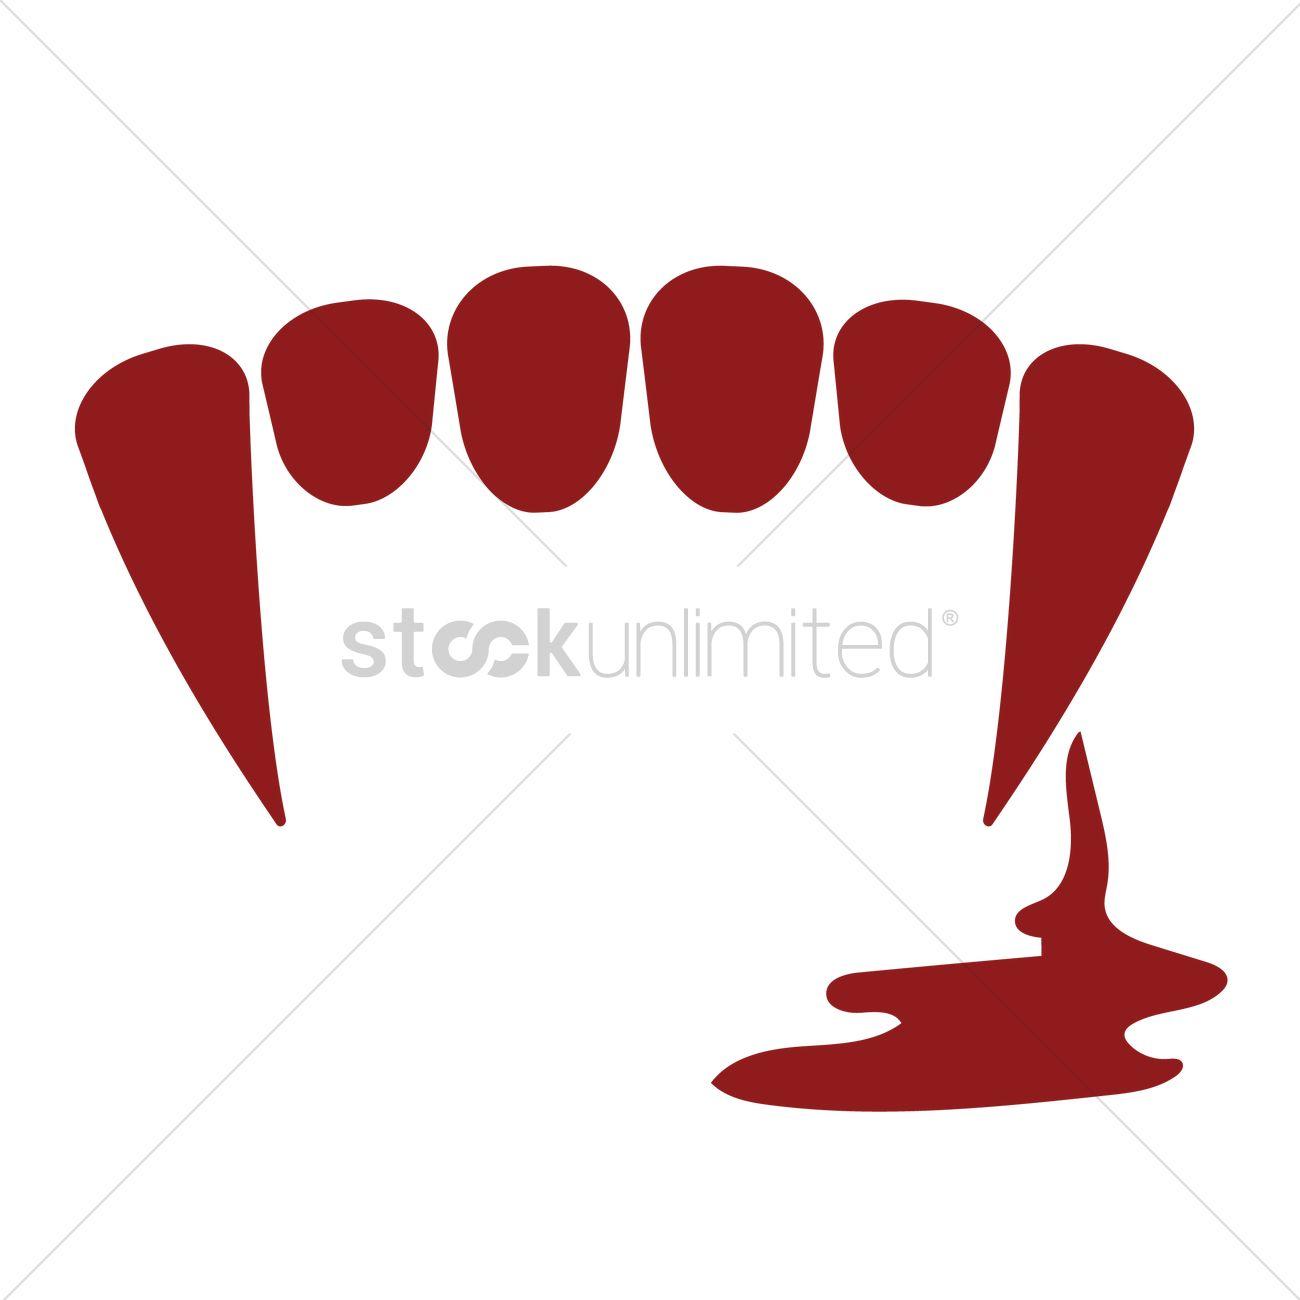 Vampire Fangs Logo - Vampire teeth with blood Vector Image